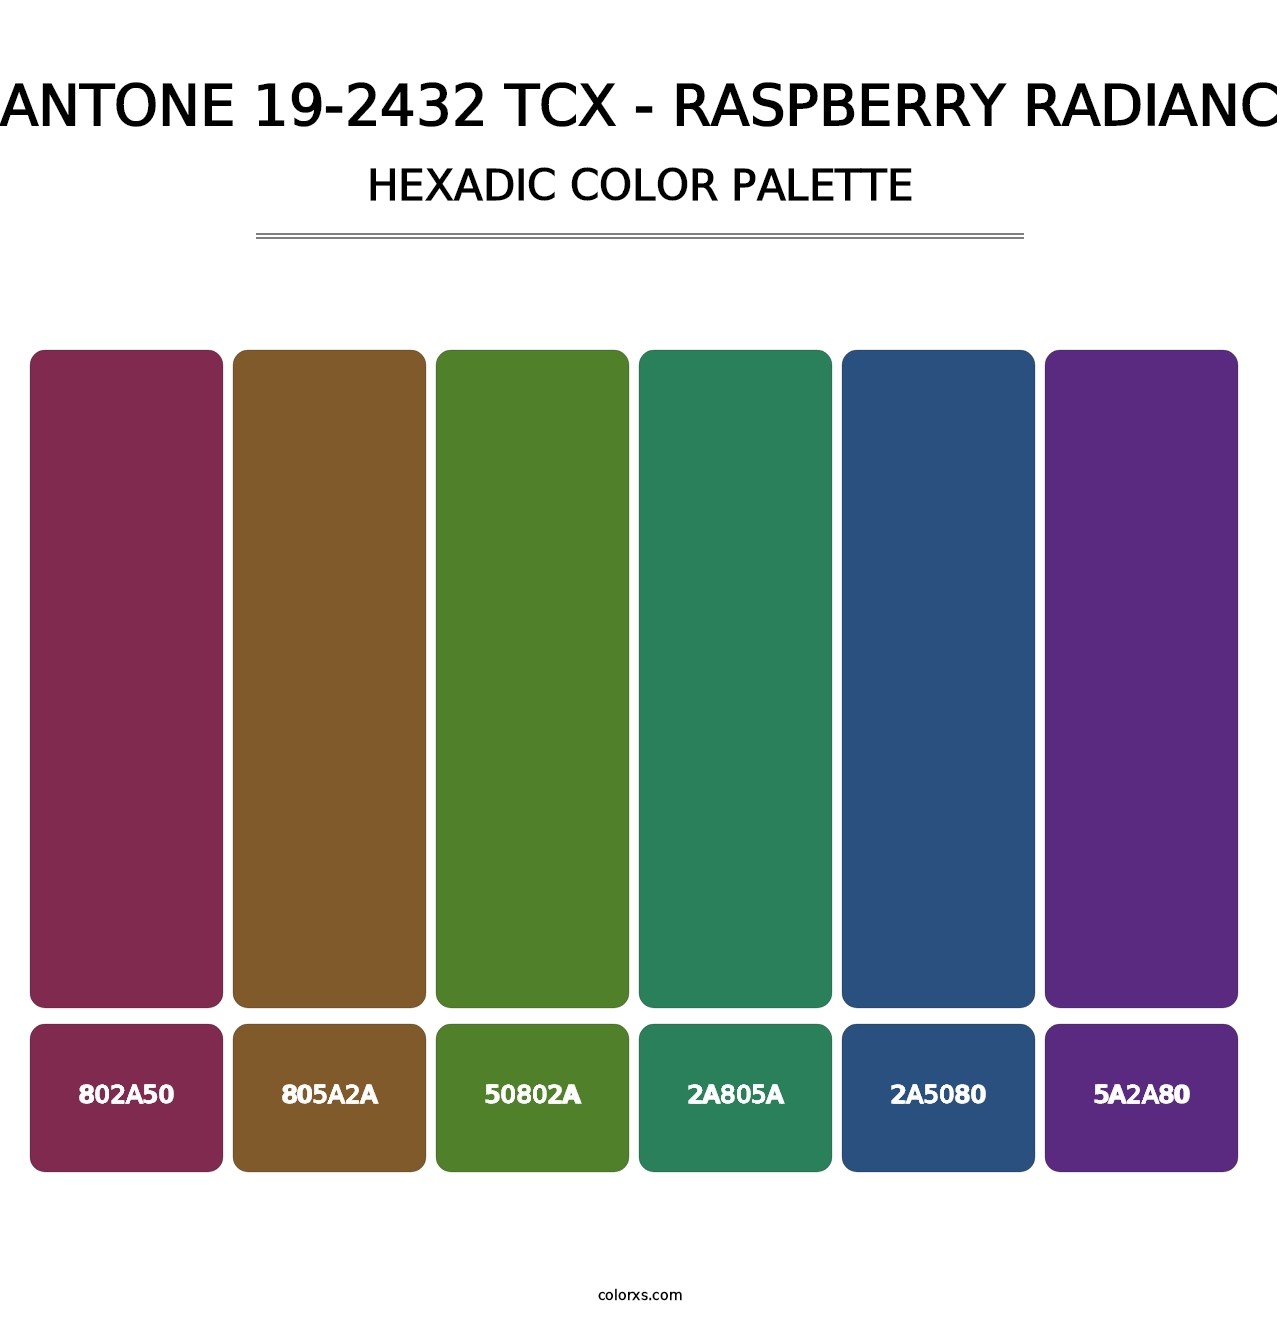 PANTONE 19-2432 TCX - Raspberry Radiance - Hexadic Color Palette